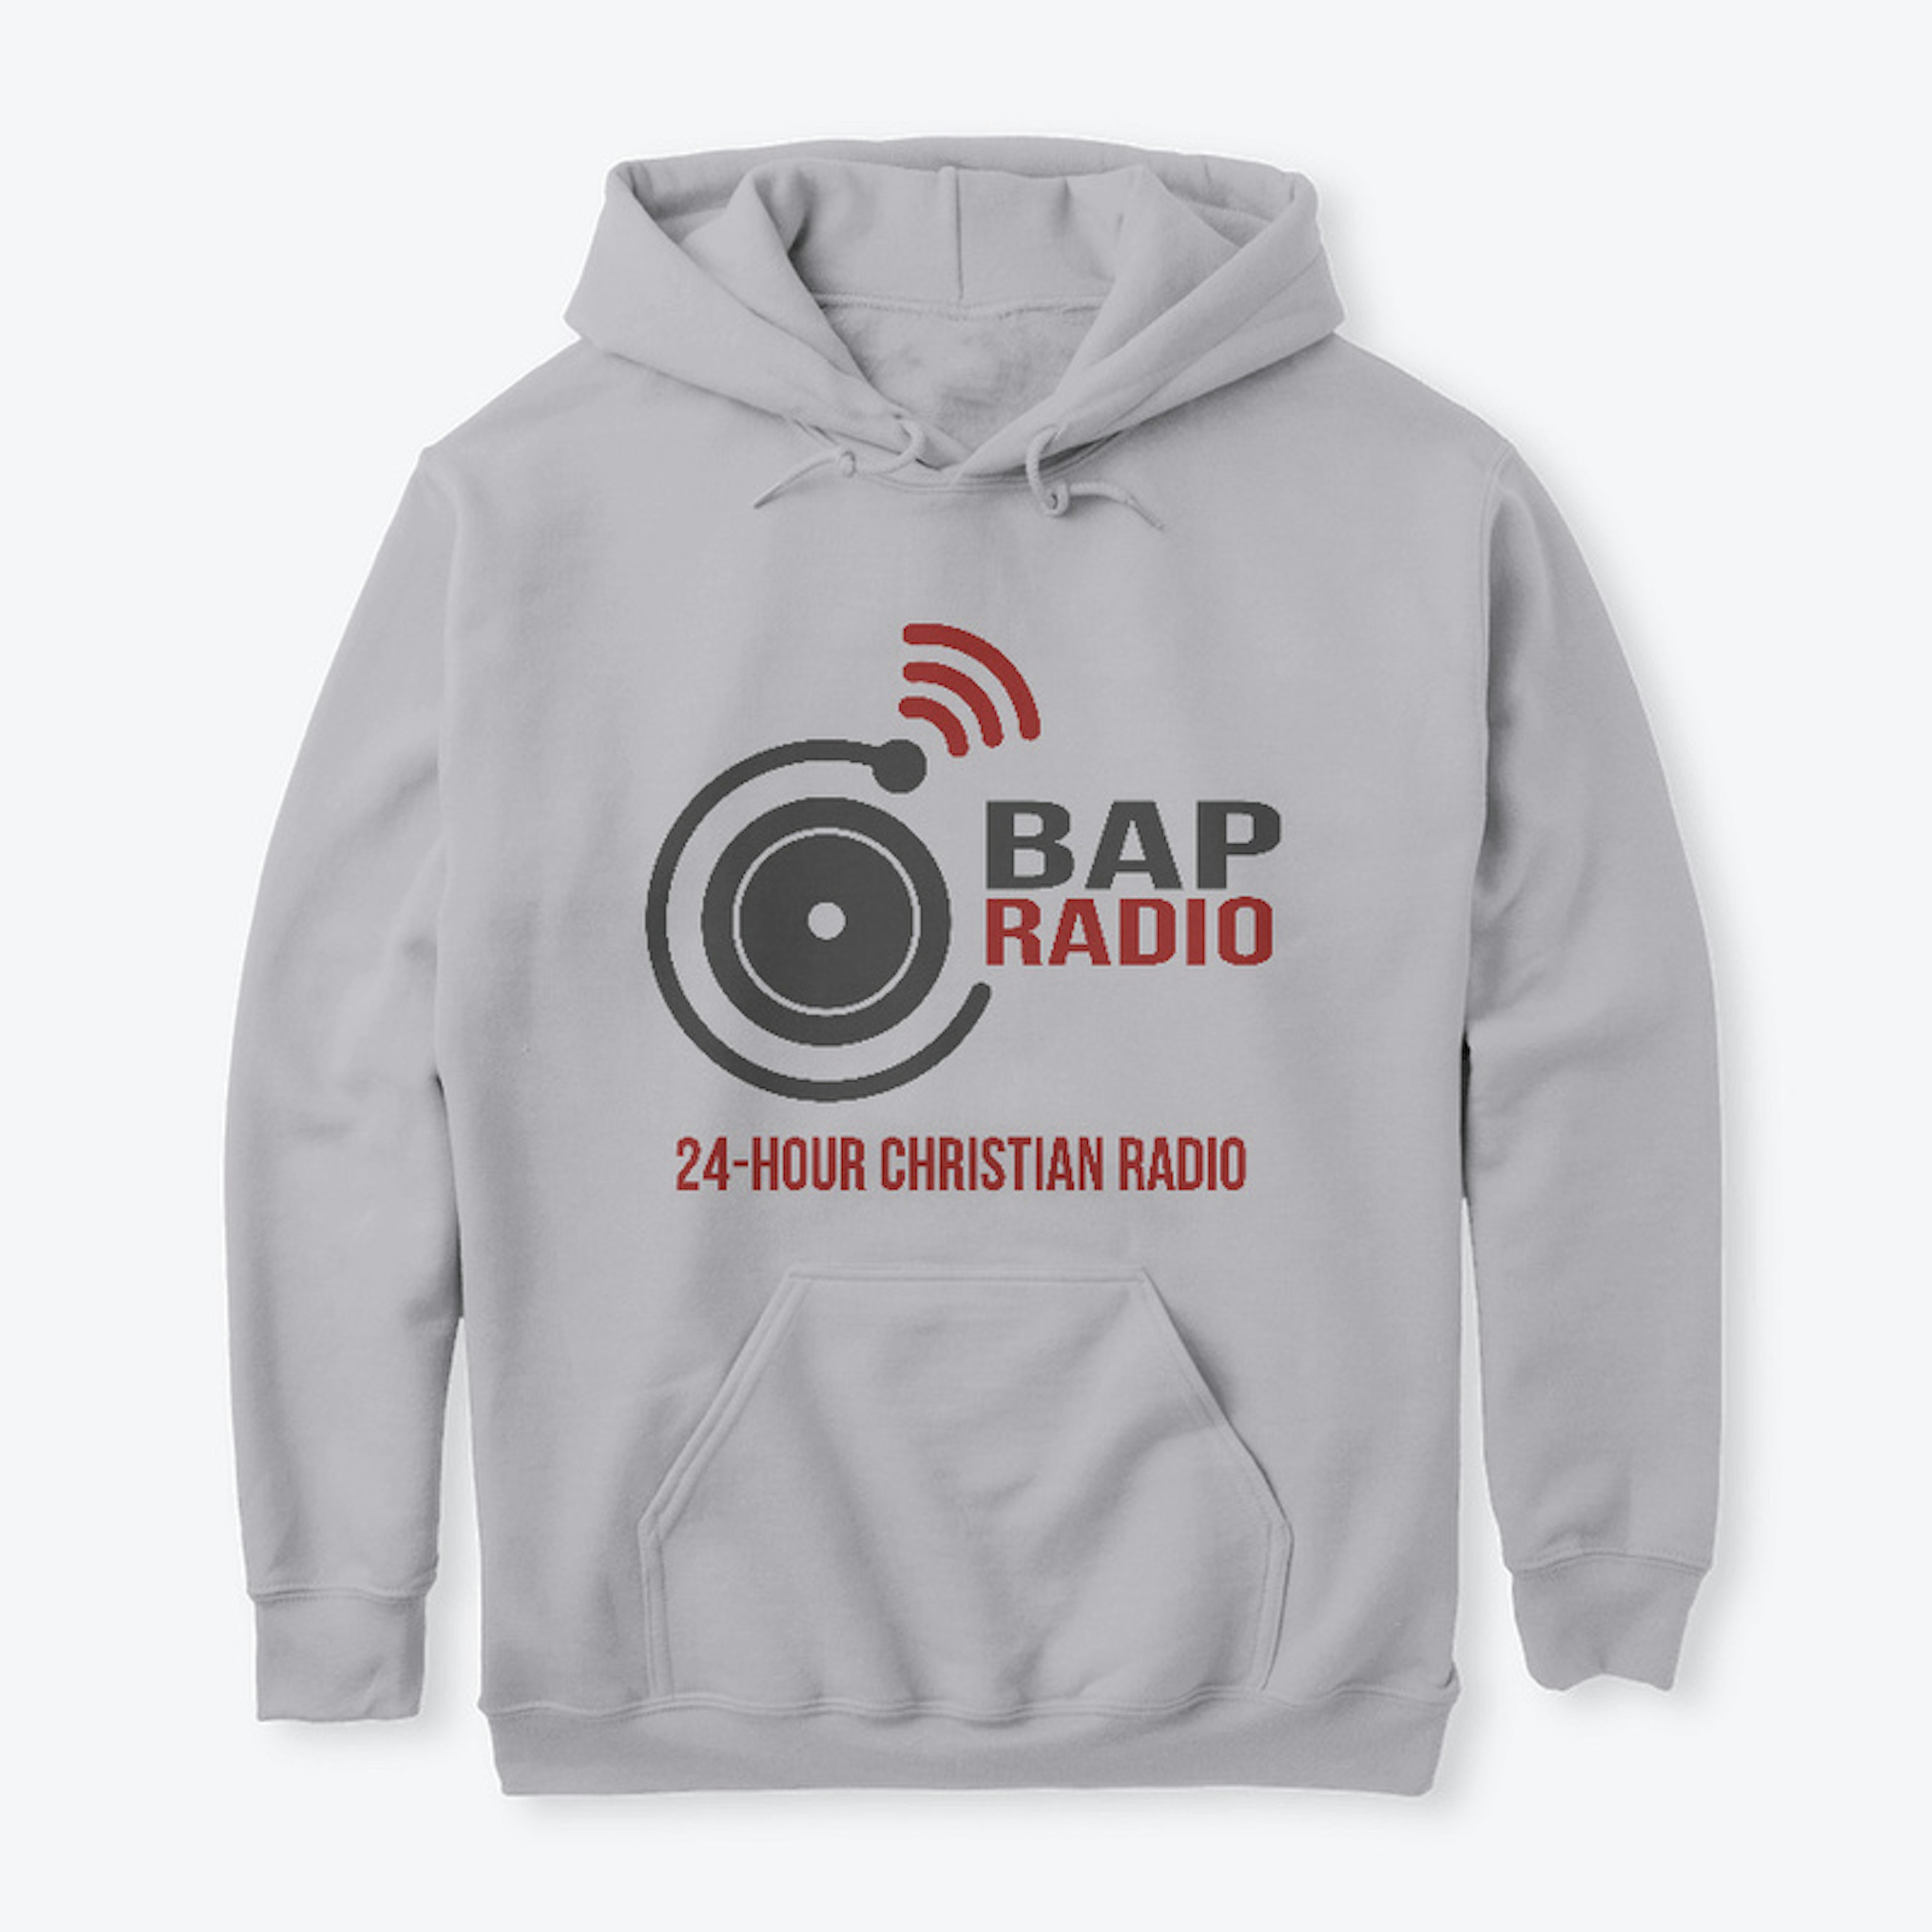 Bap Radio 24-Hour Christian Radio